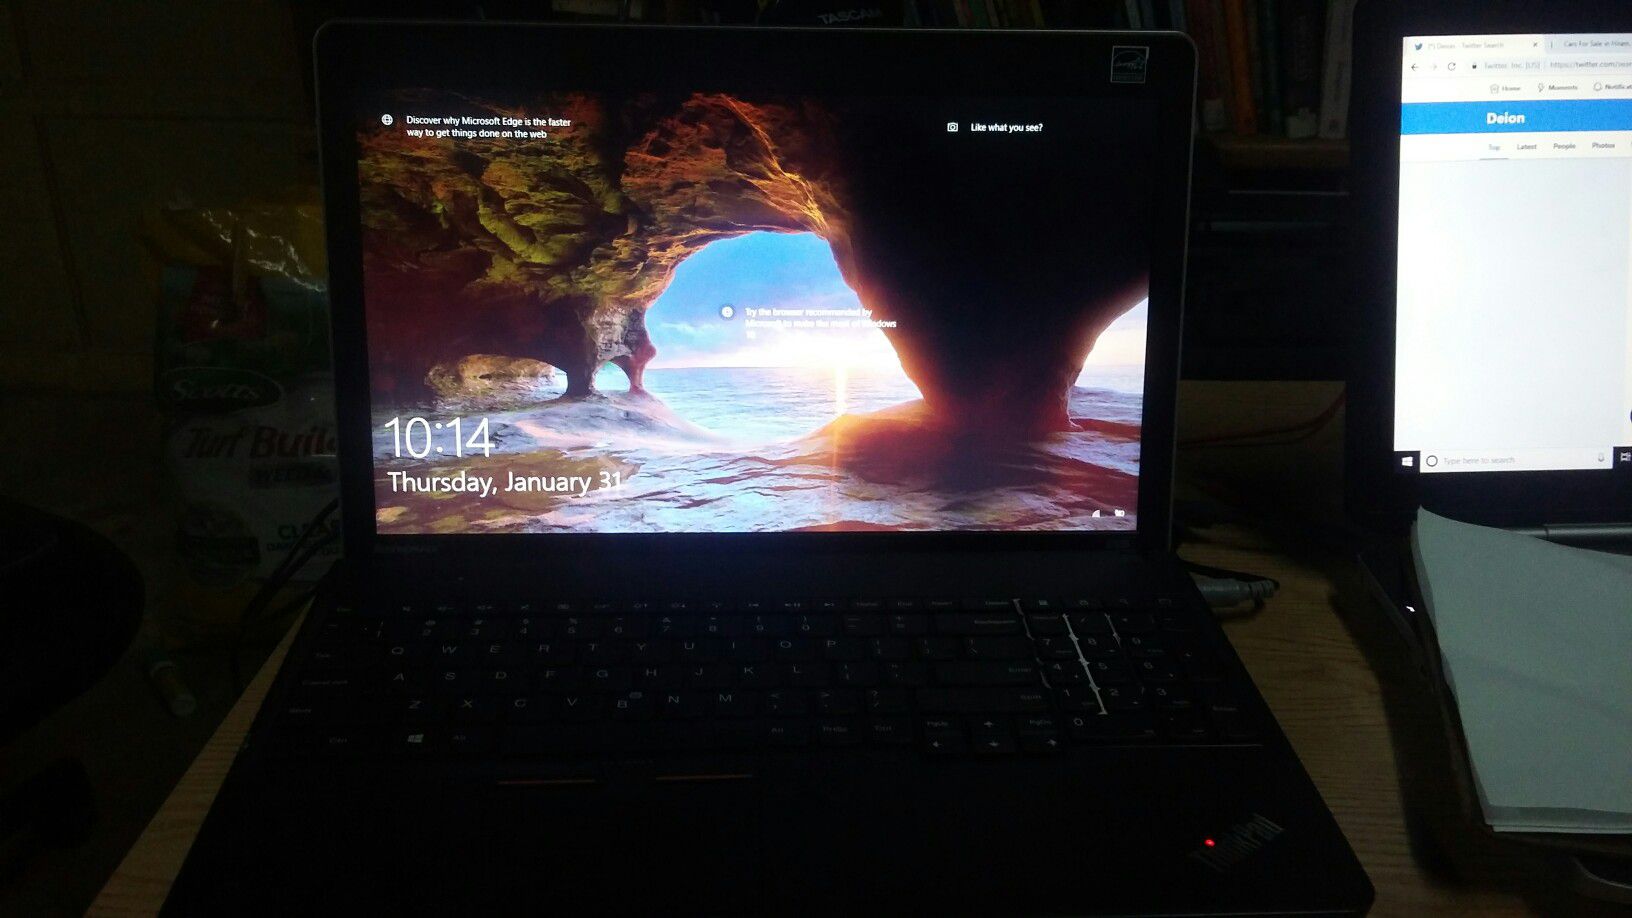 Refurbished Lenovo E535 ThinkPad Laptop w/ 15.6 LED Screen